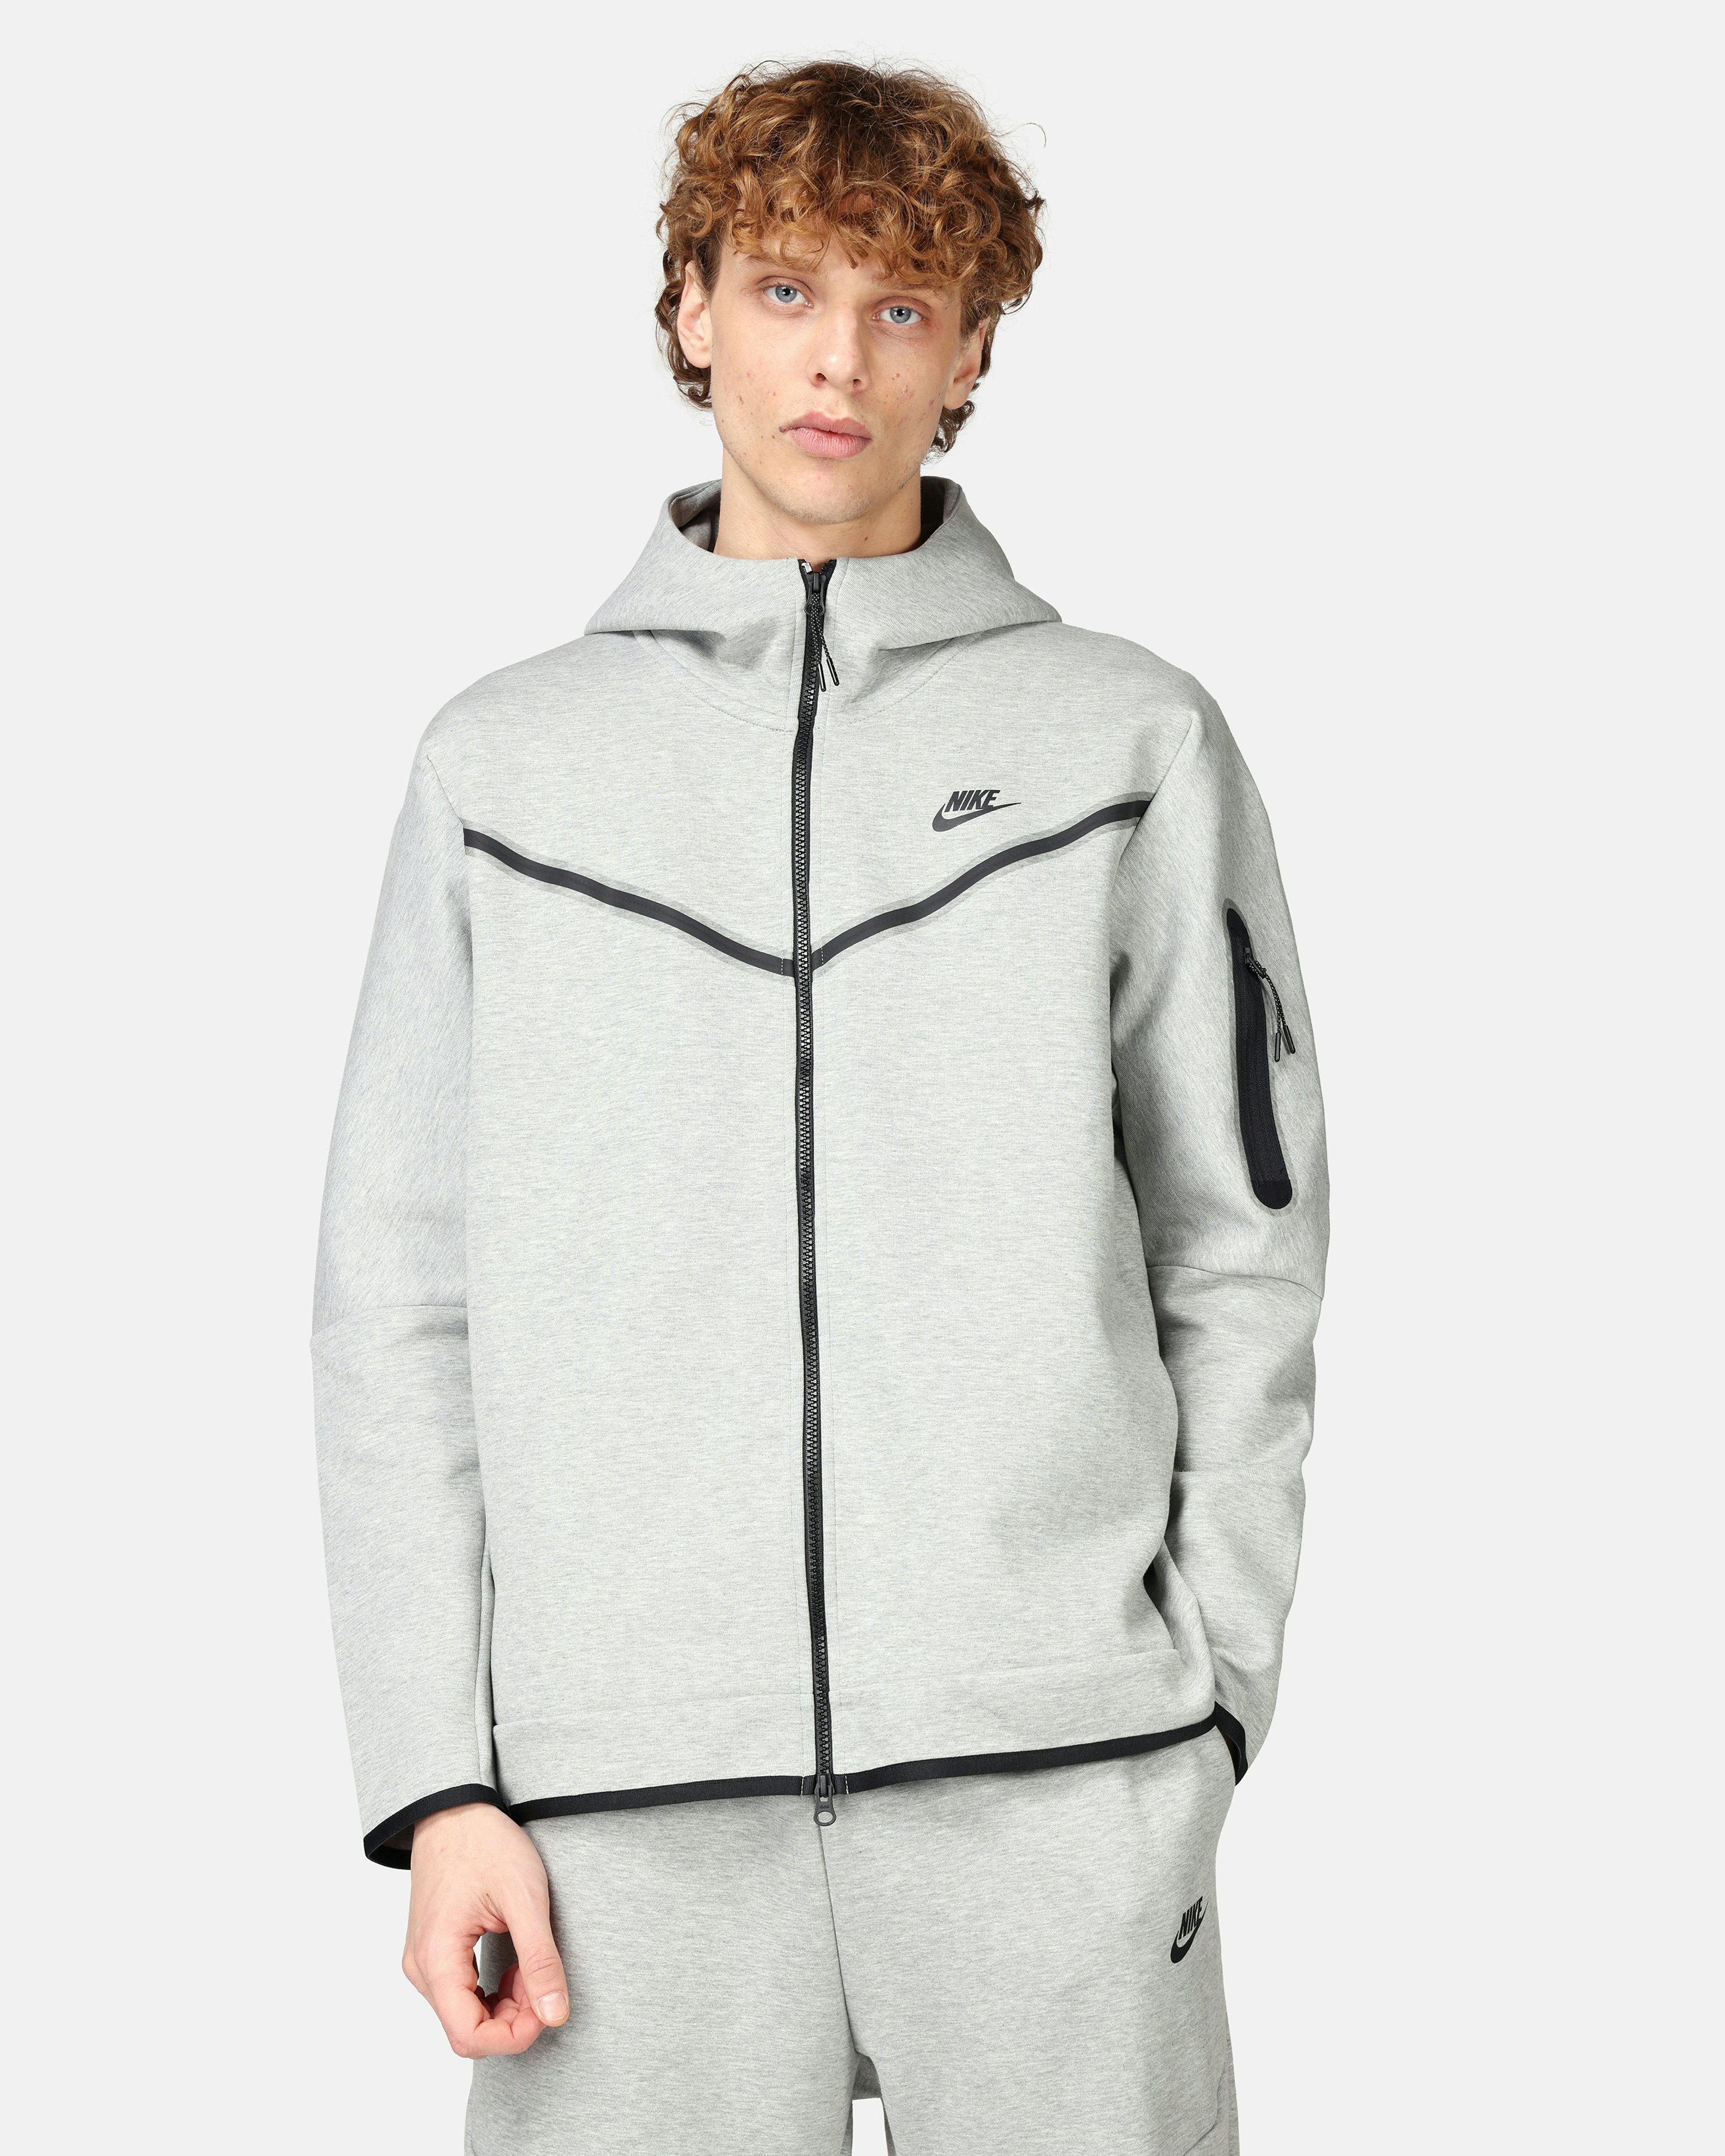 Nike Hoodie - Tech Fleece Dark grey melange | Unisex | Junkyard